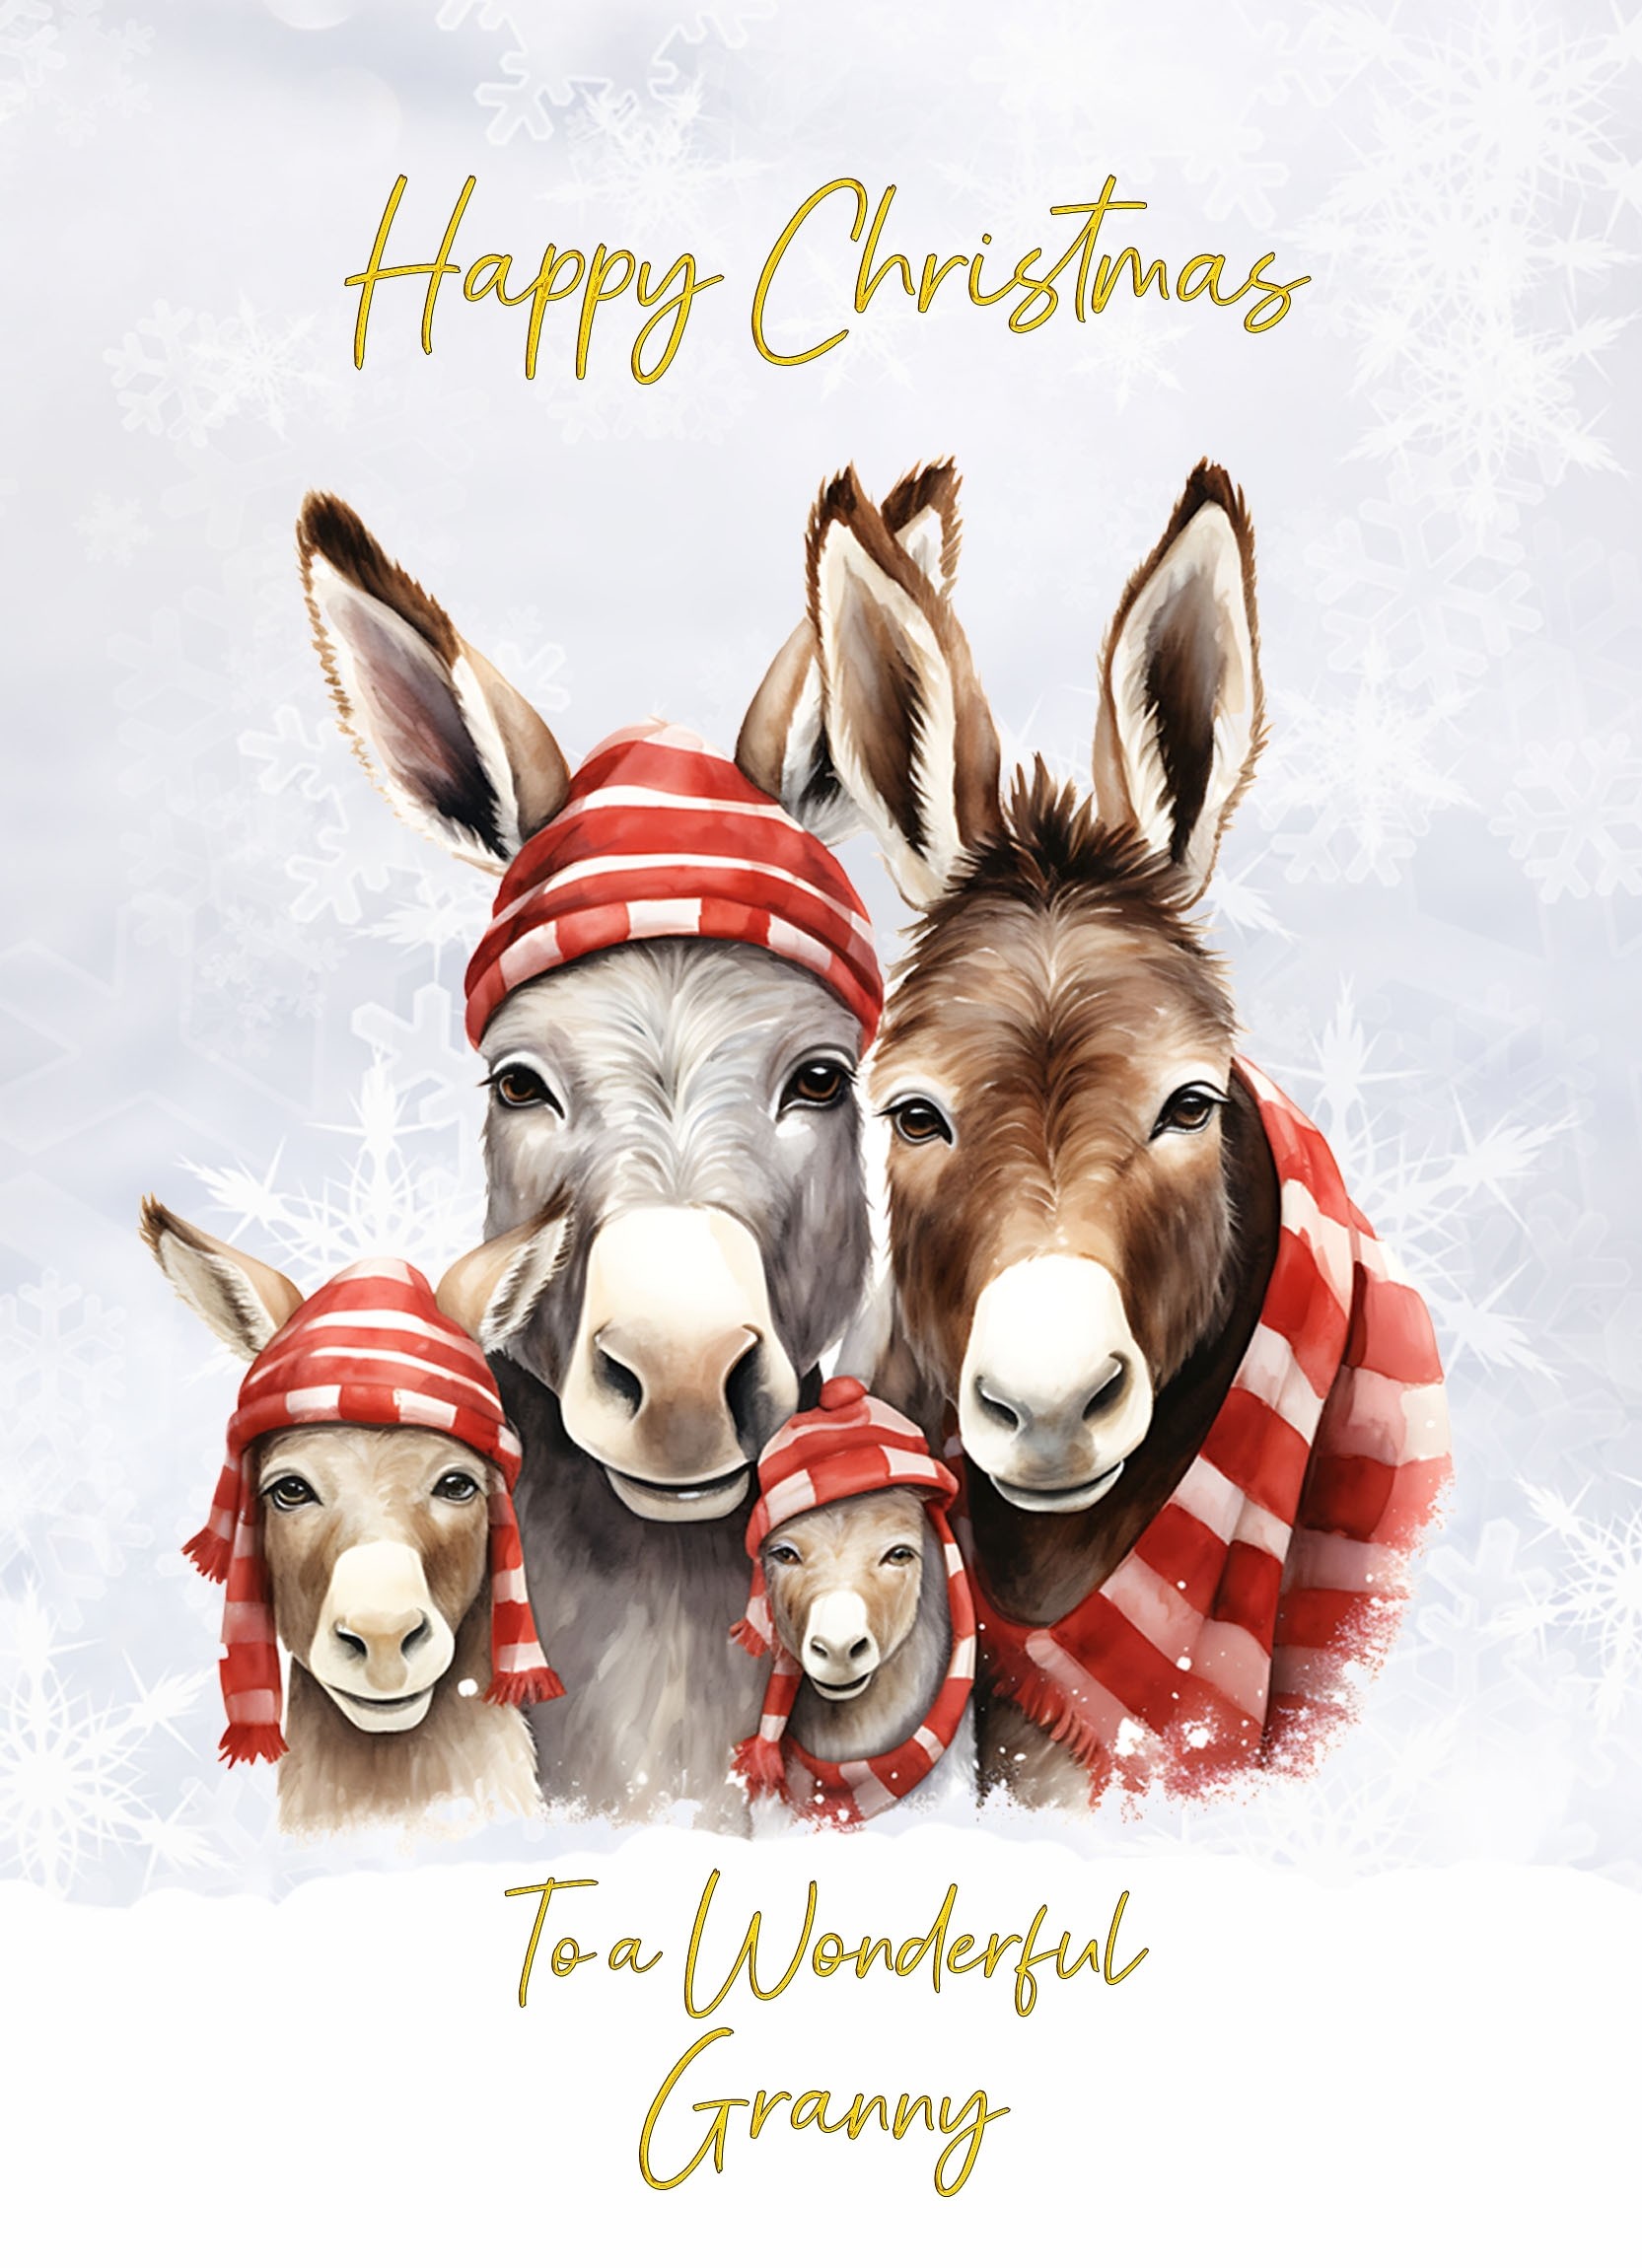 Christmas Card For Granny (Donkey Family Art)